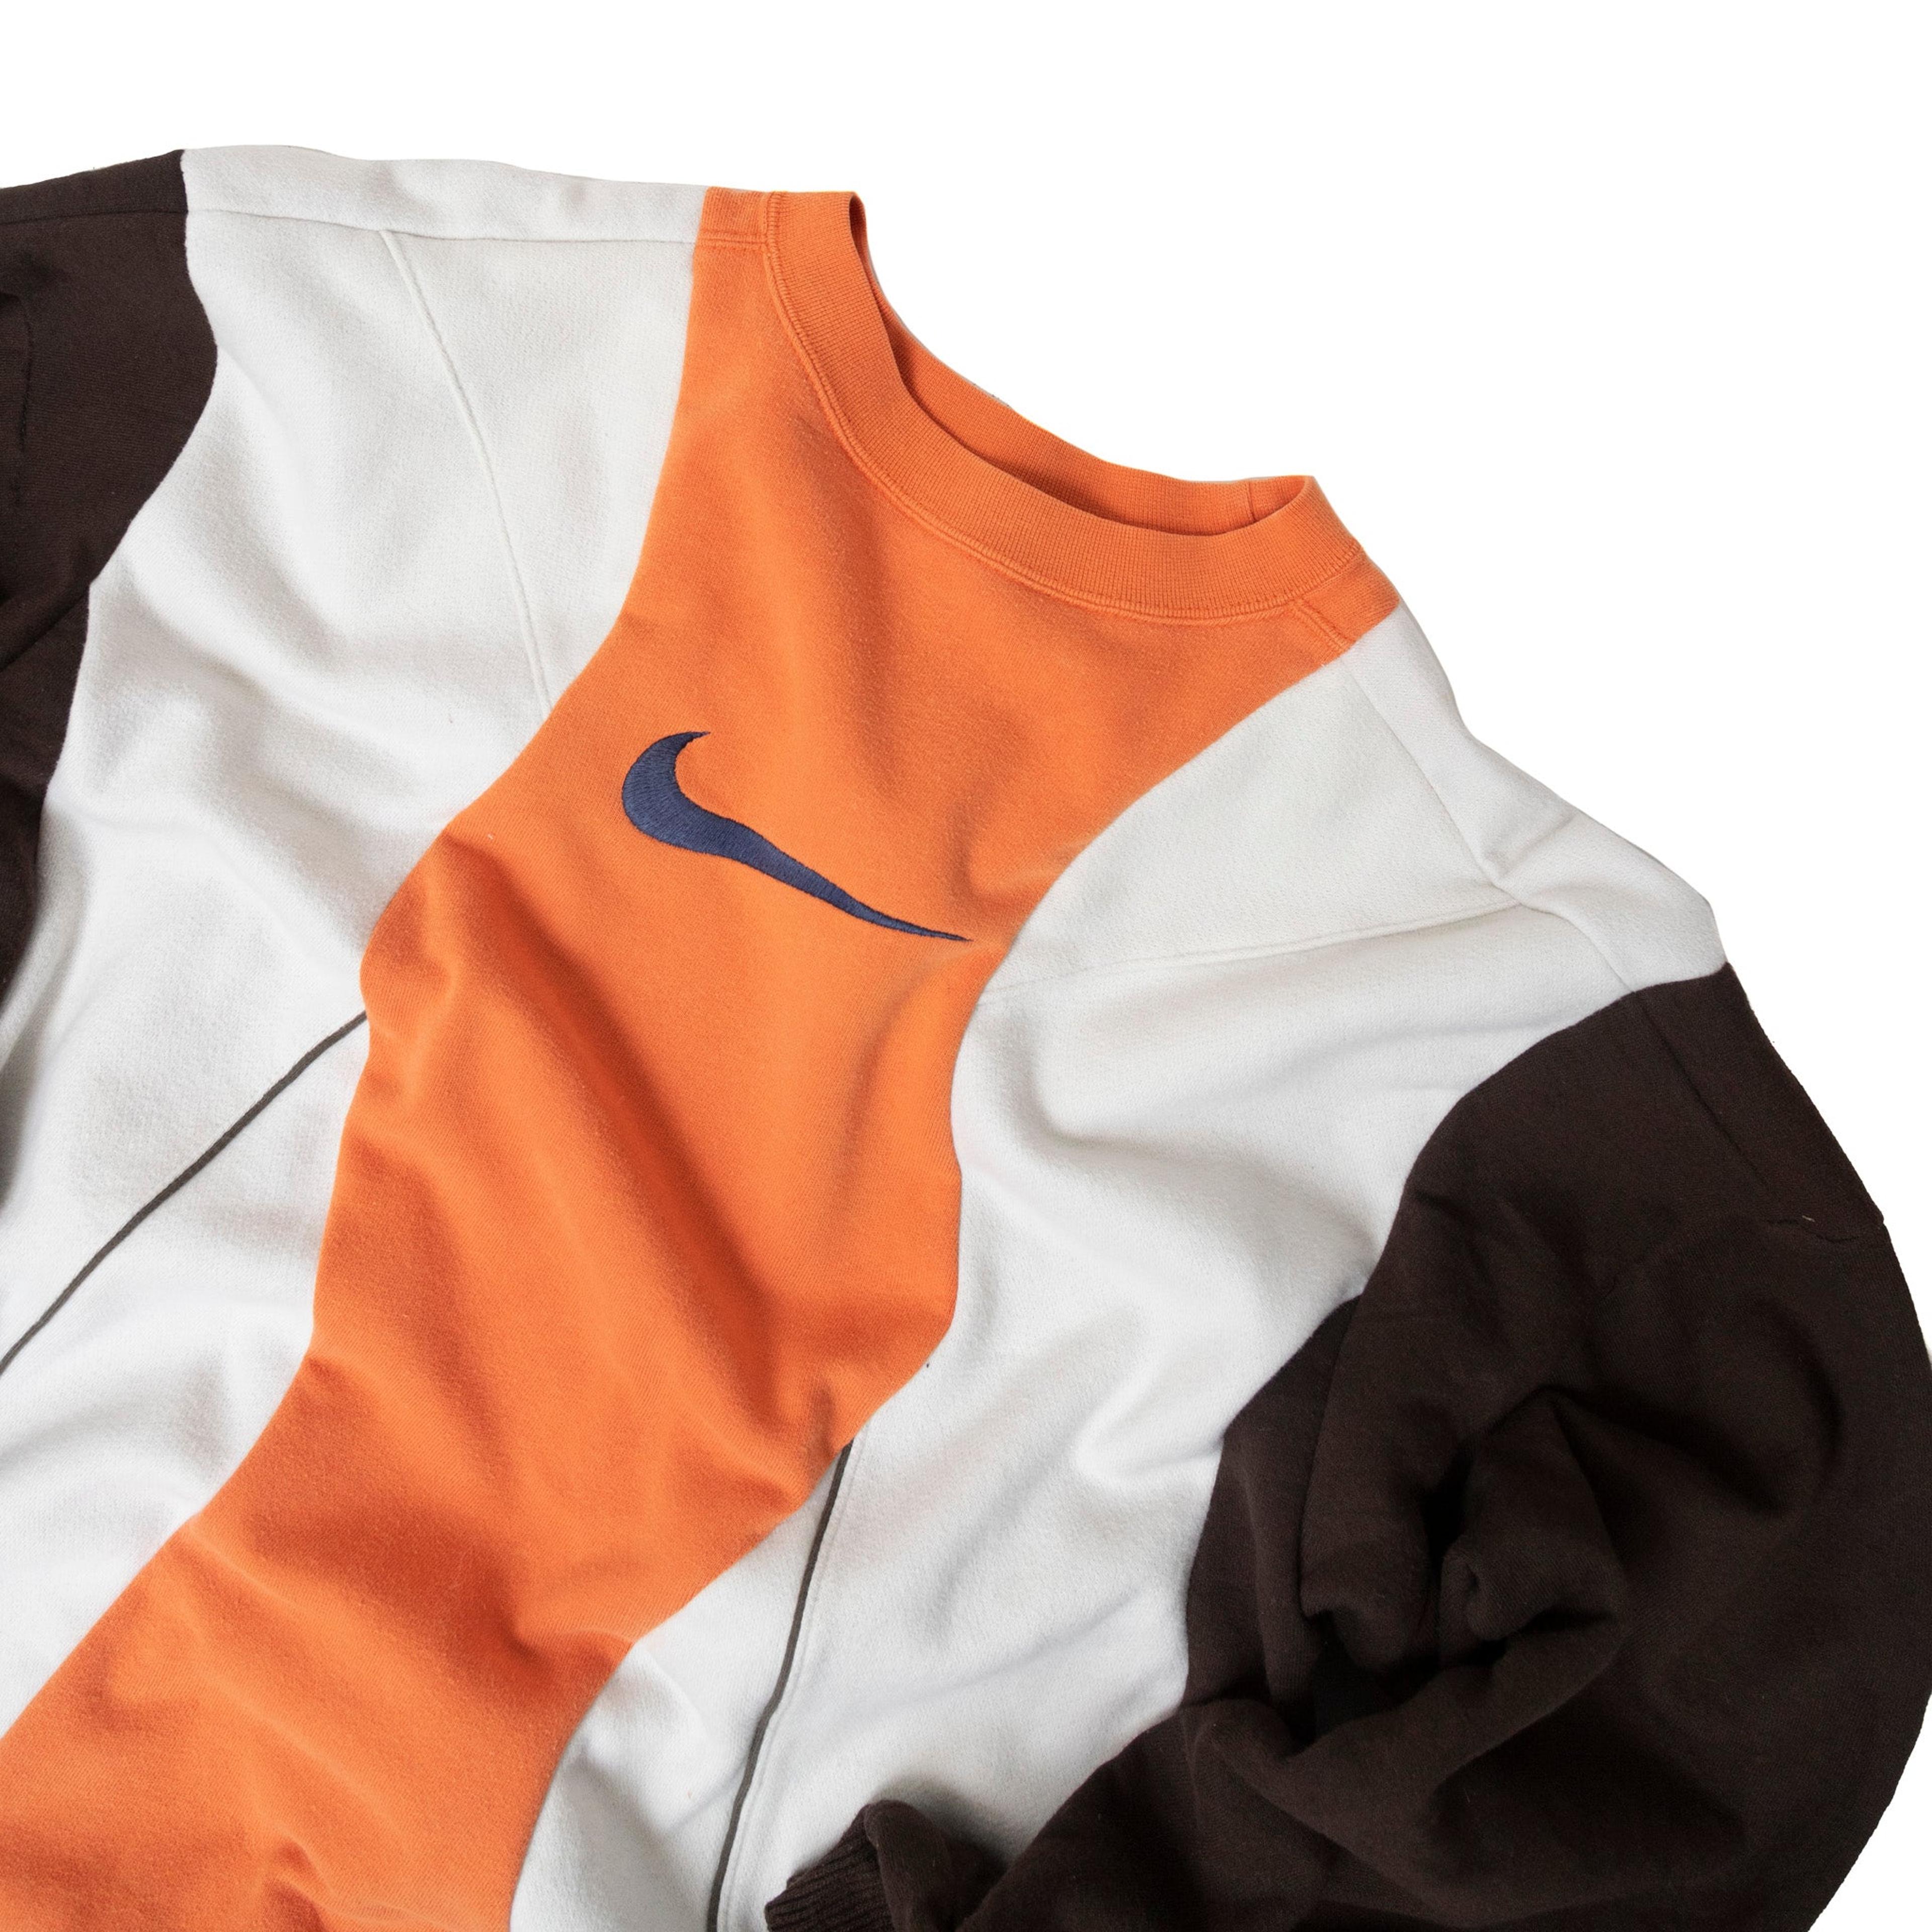 Alternate View 1 of VT Rework: Nike Wavy Orange Sweater